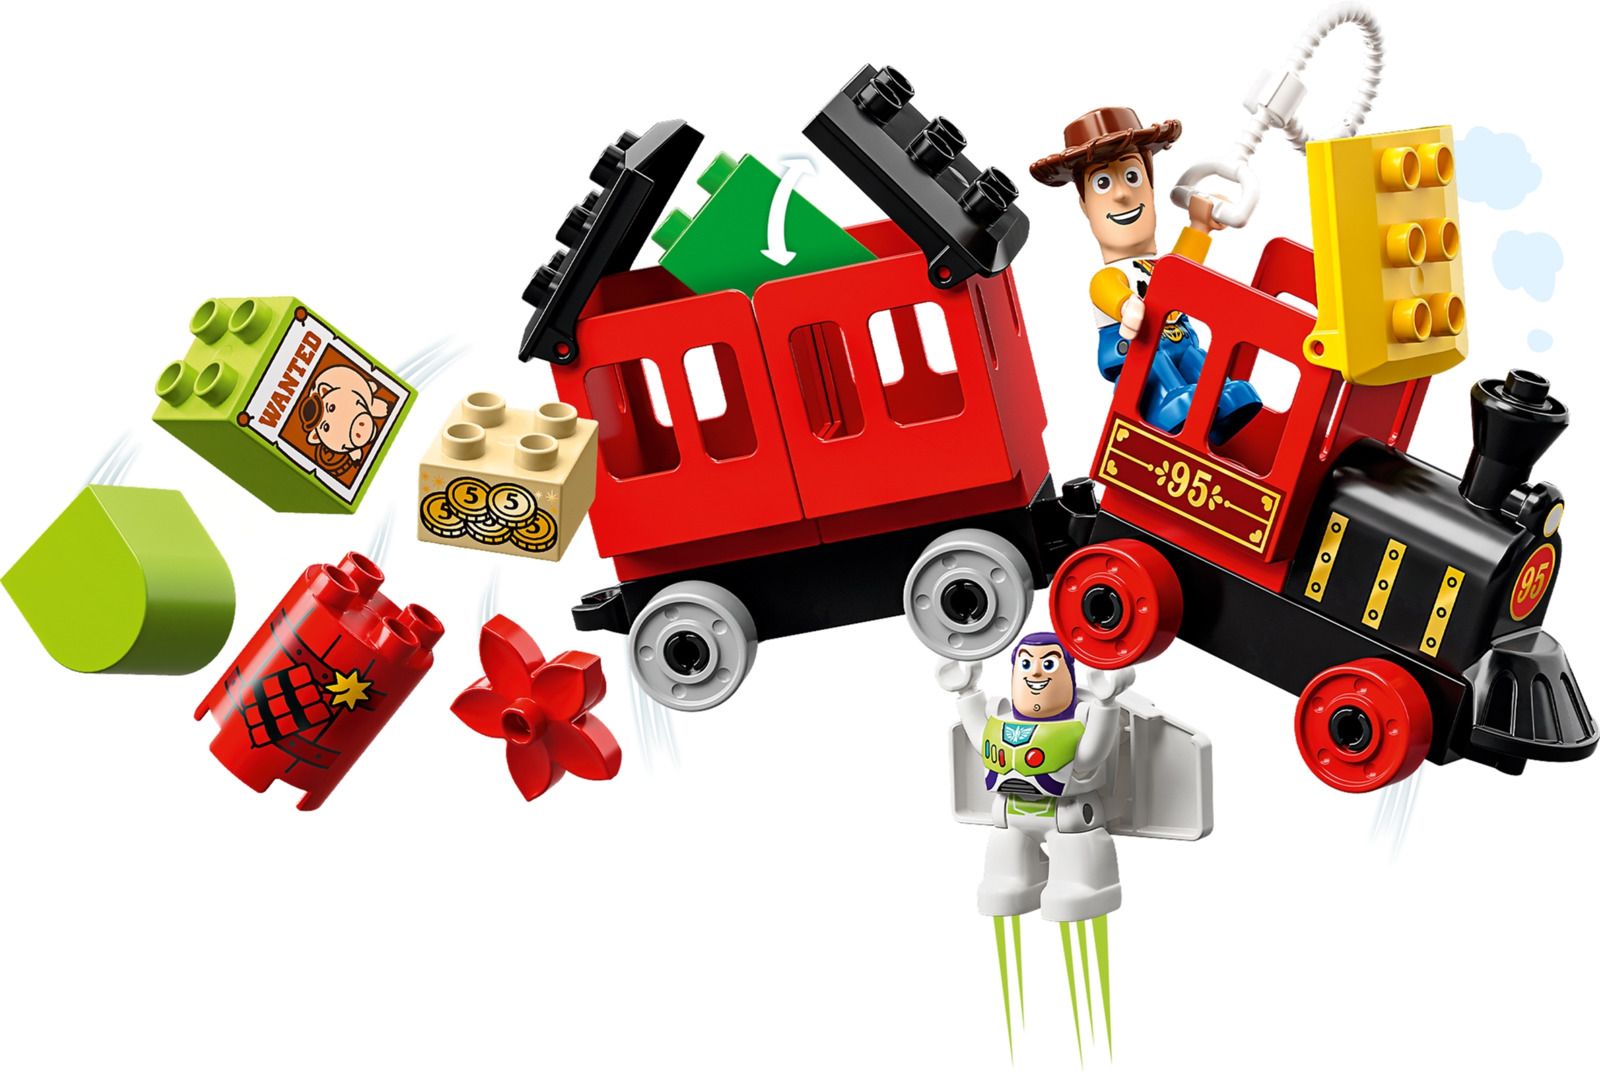 LEGO DUPLO Toy Story      10894